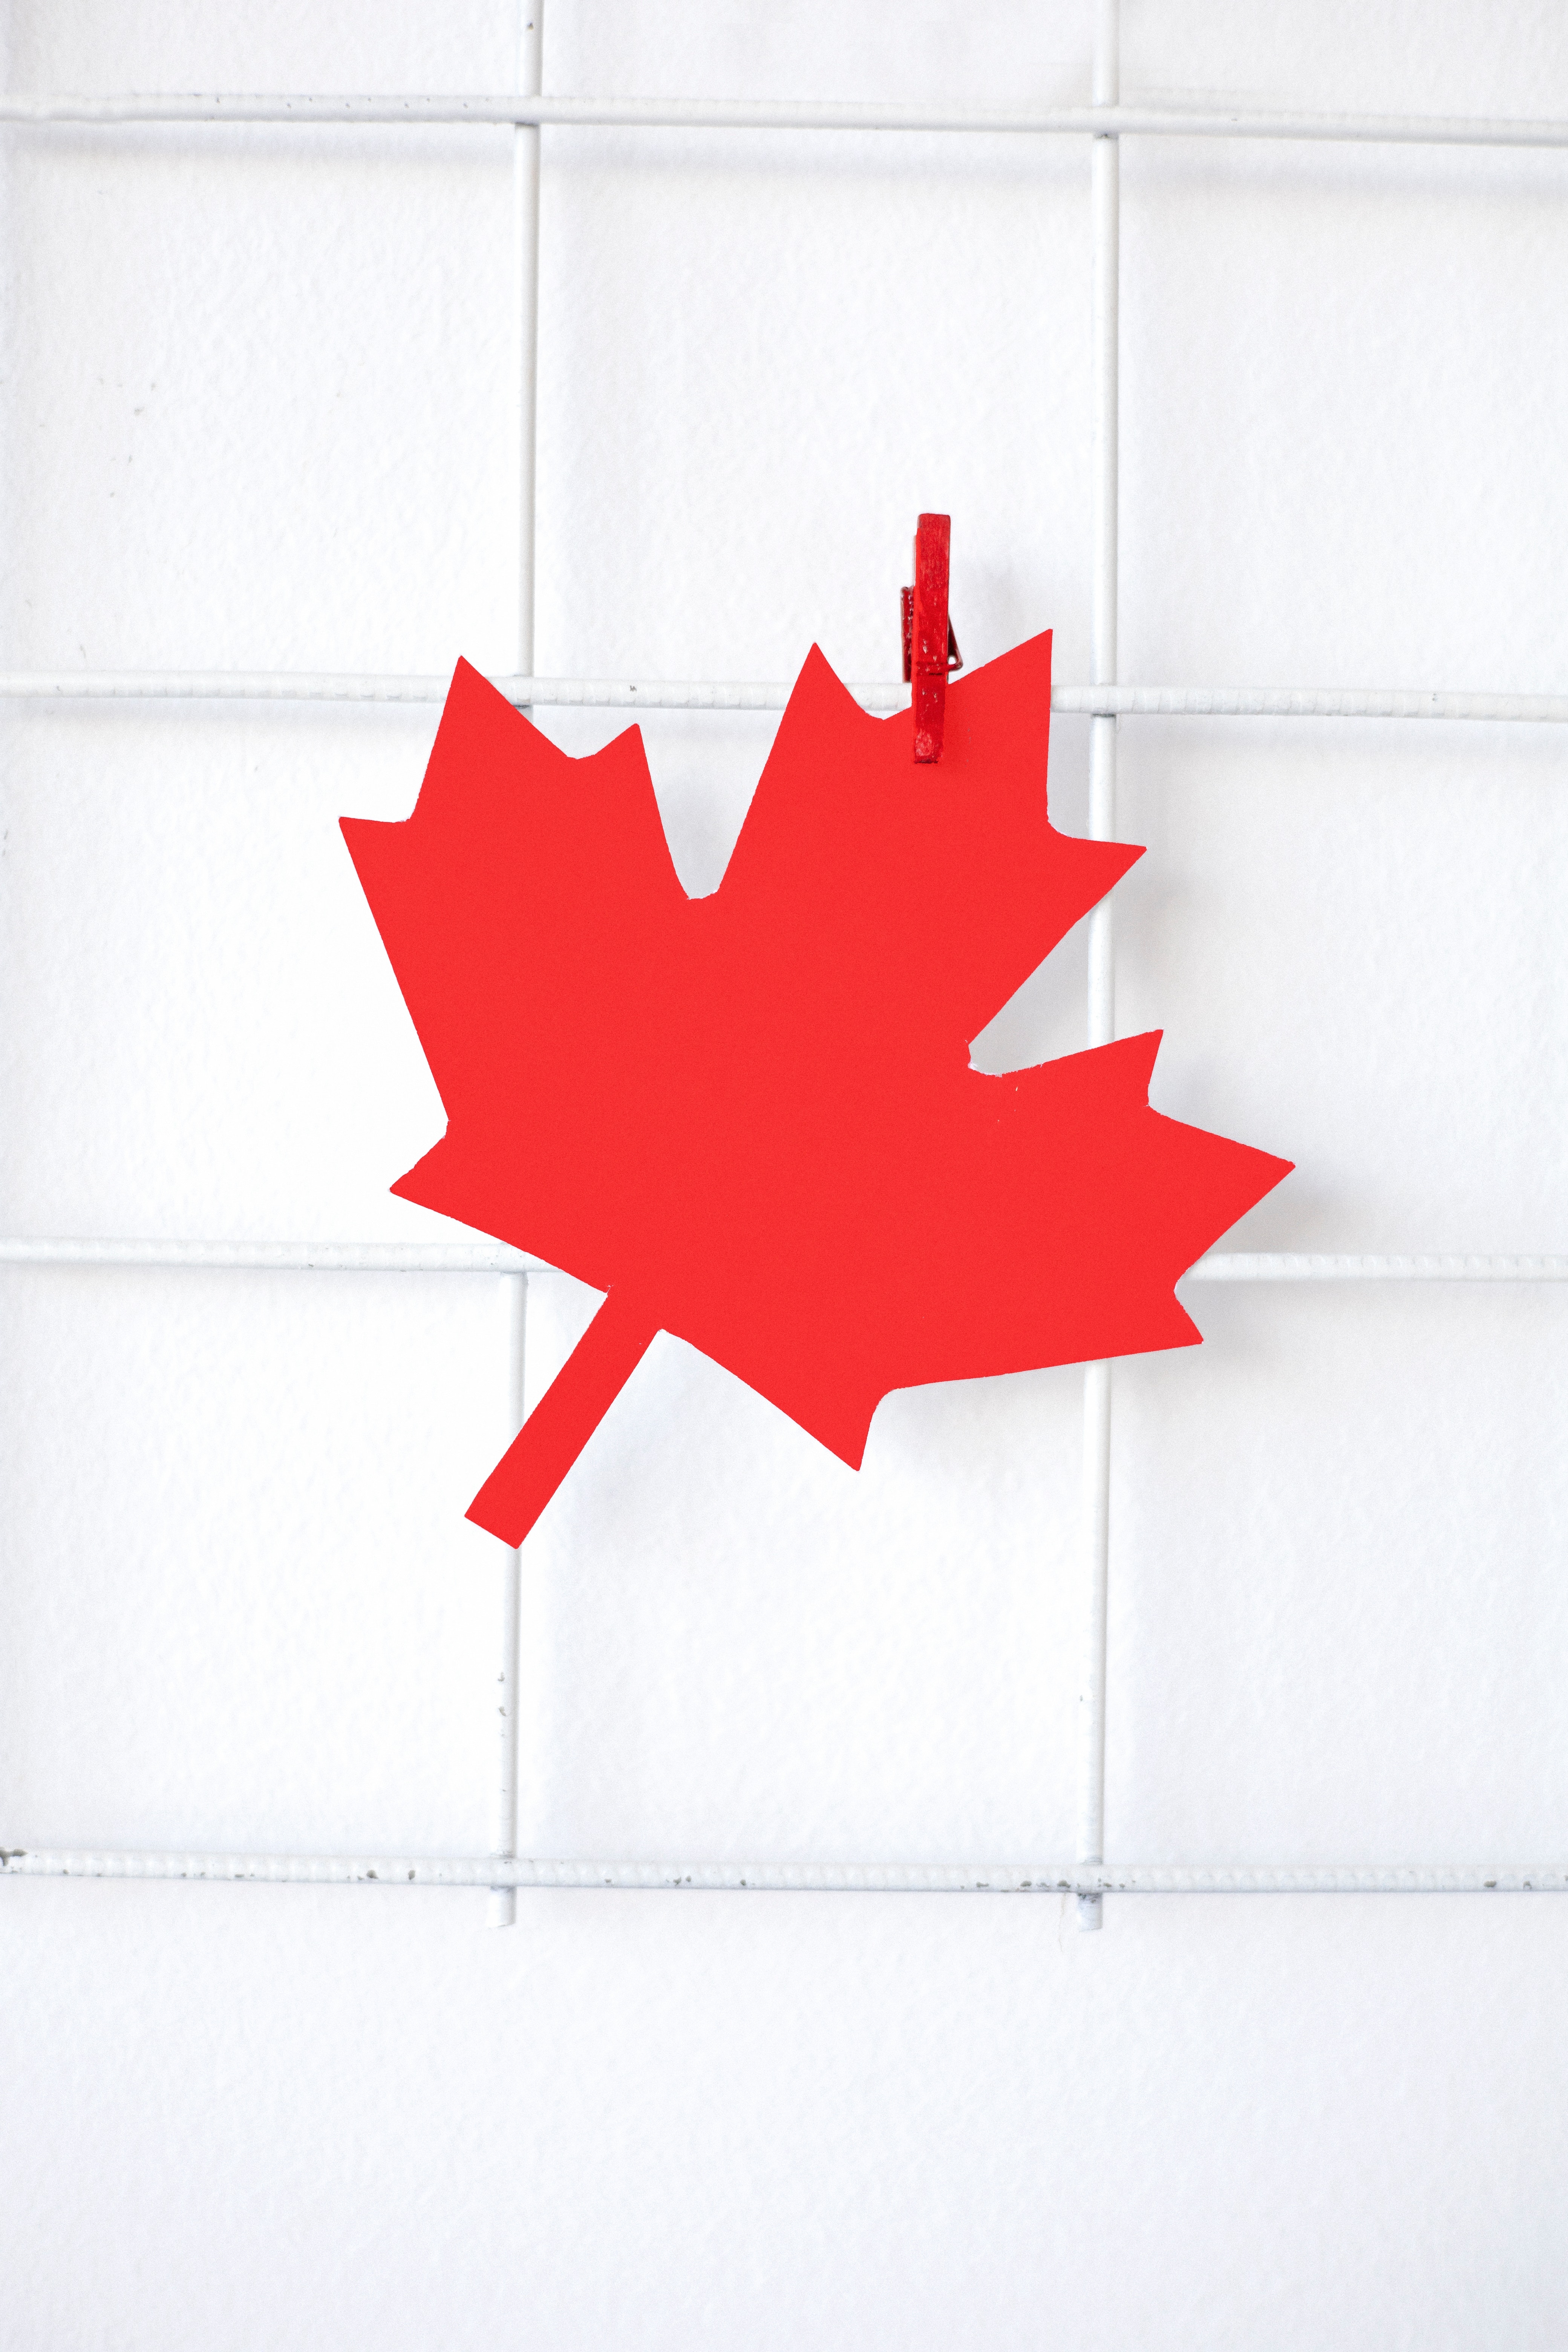 National Flag - Flag of Canada